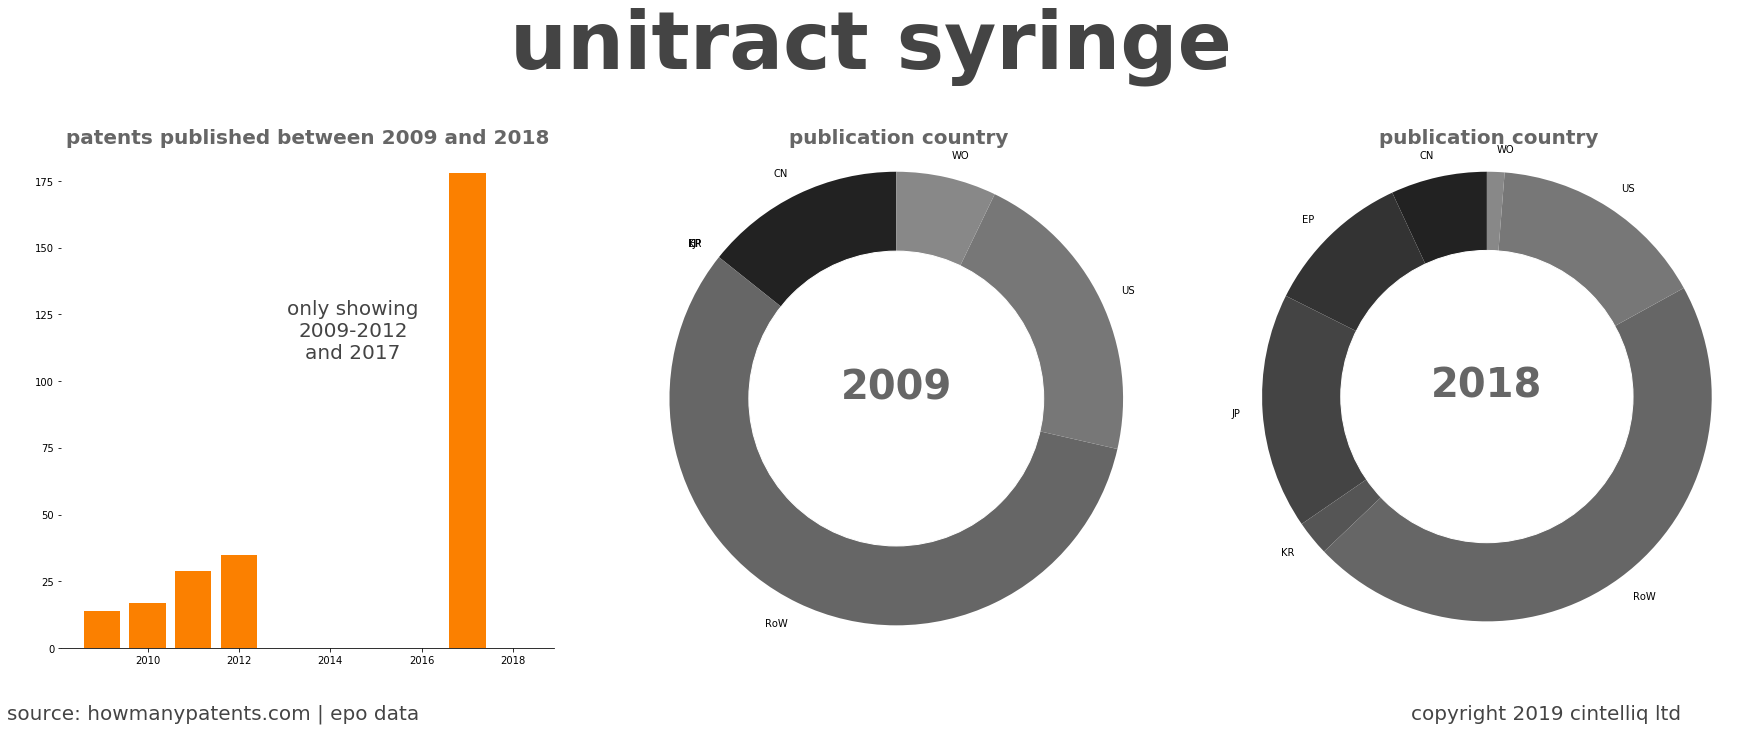 summary of patents for Unitract Syringe